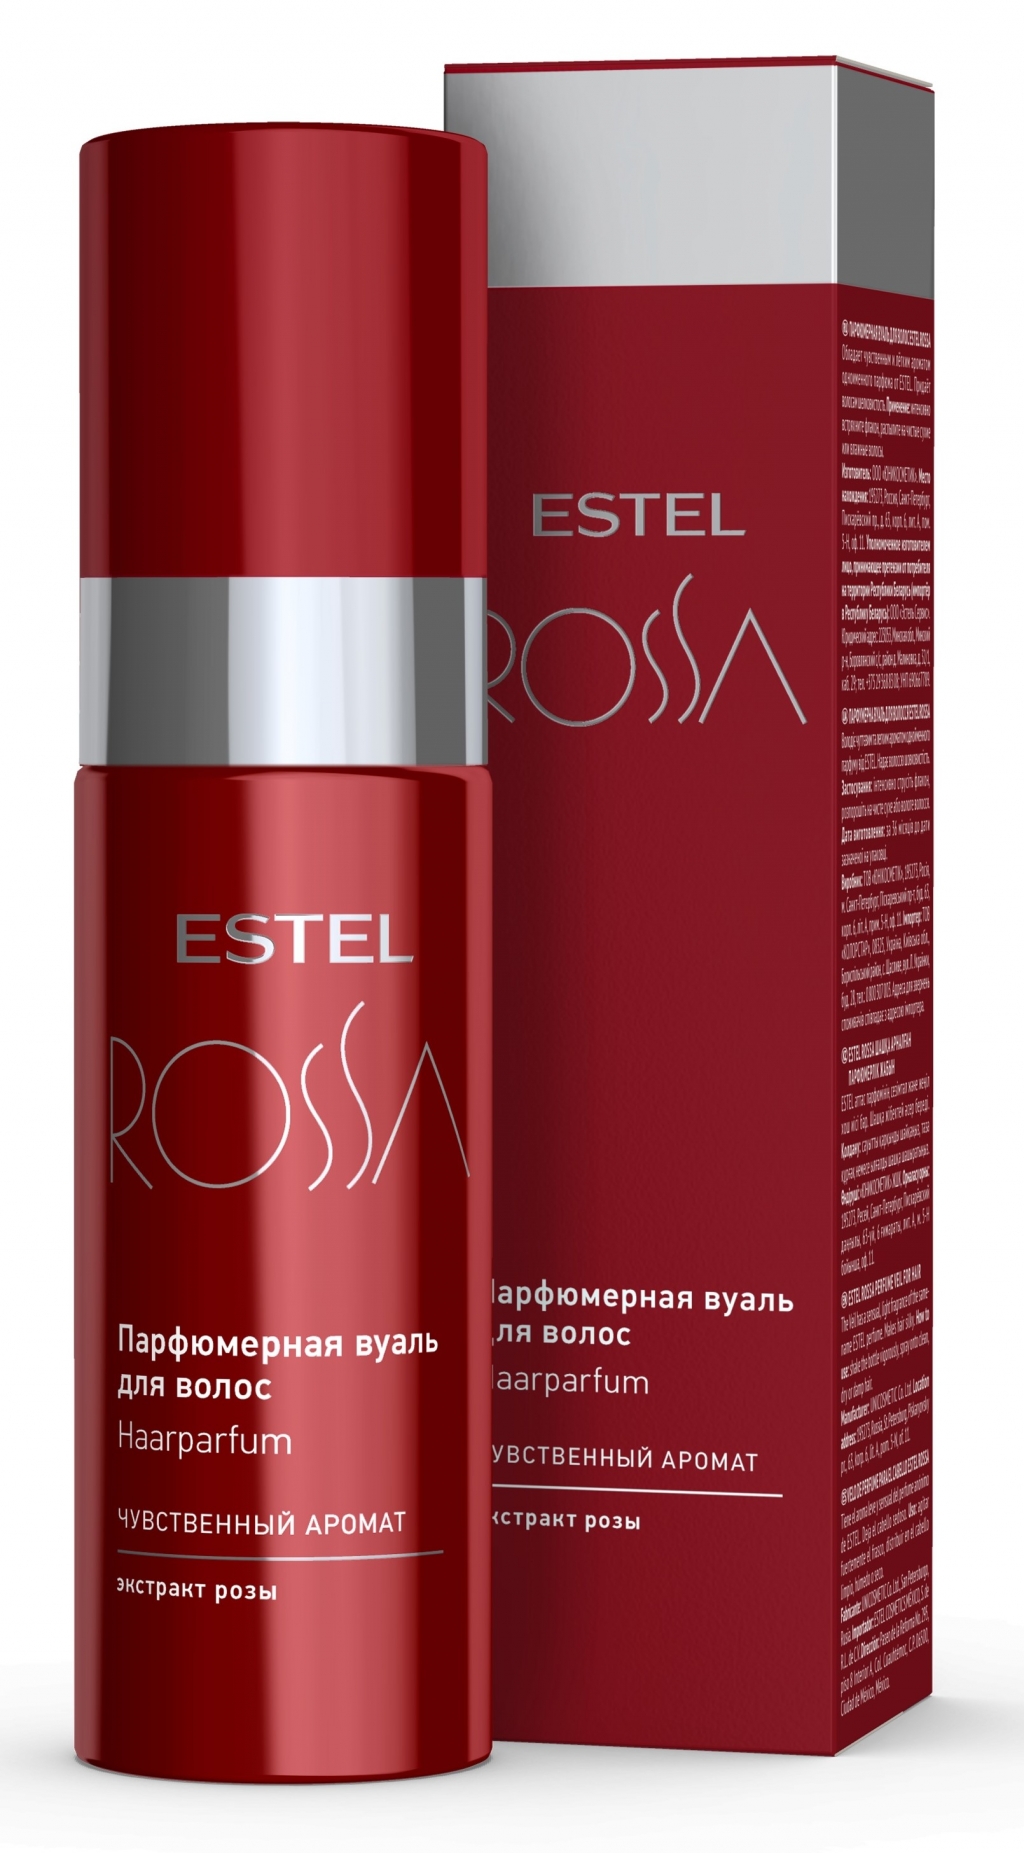 Estel Professional Парфюмерная вуаль для волос, 100 мл (Estel Professional, Rossa)